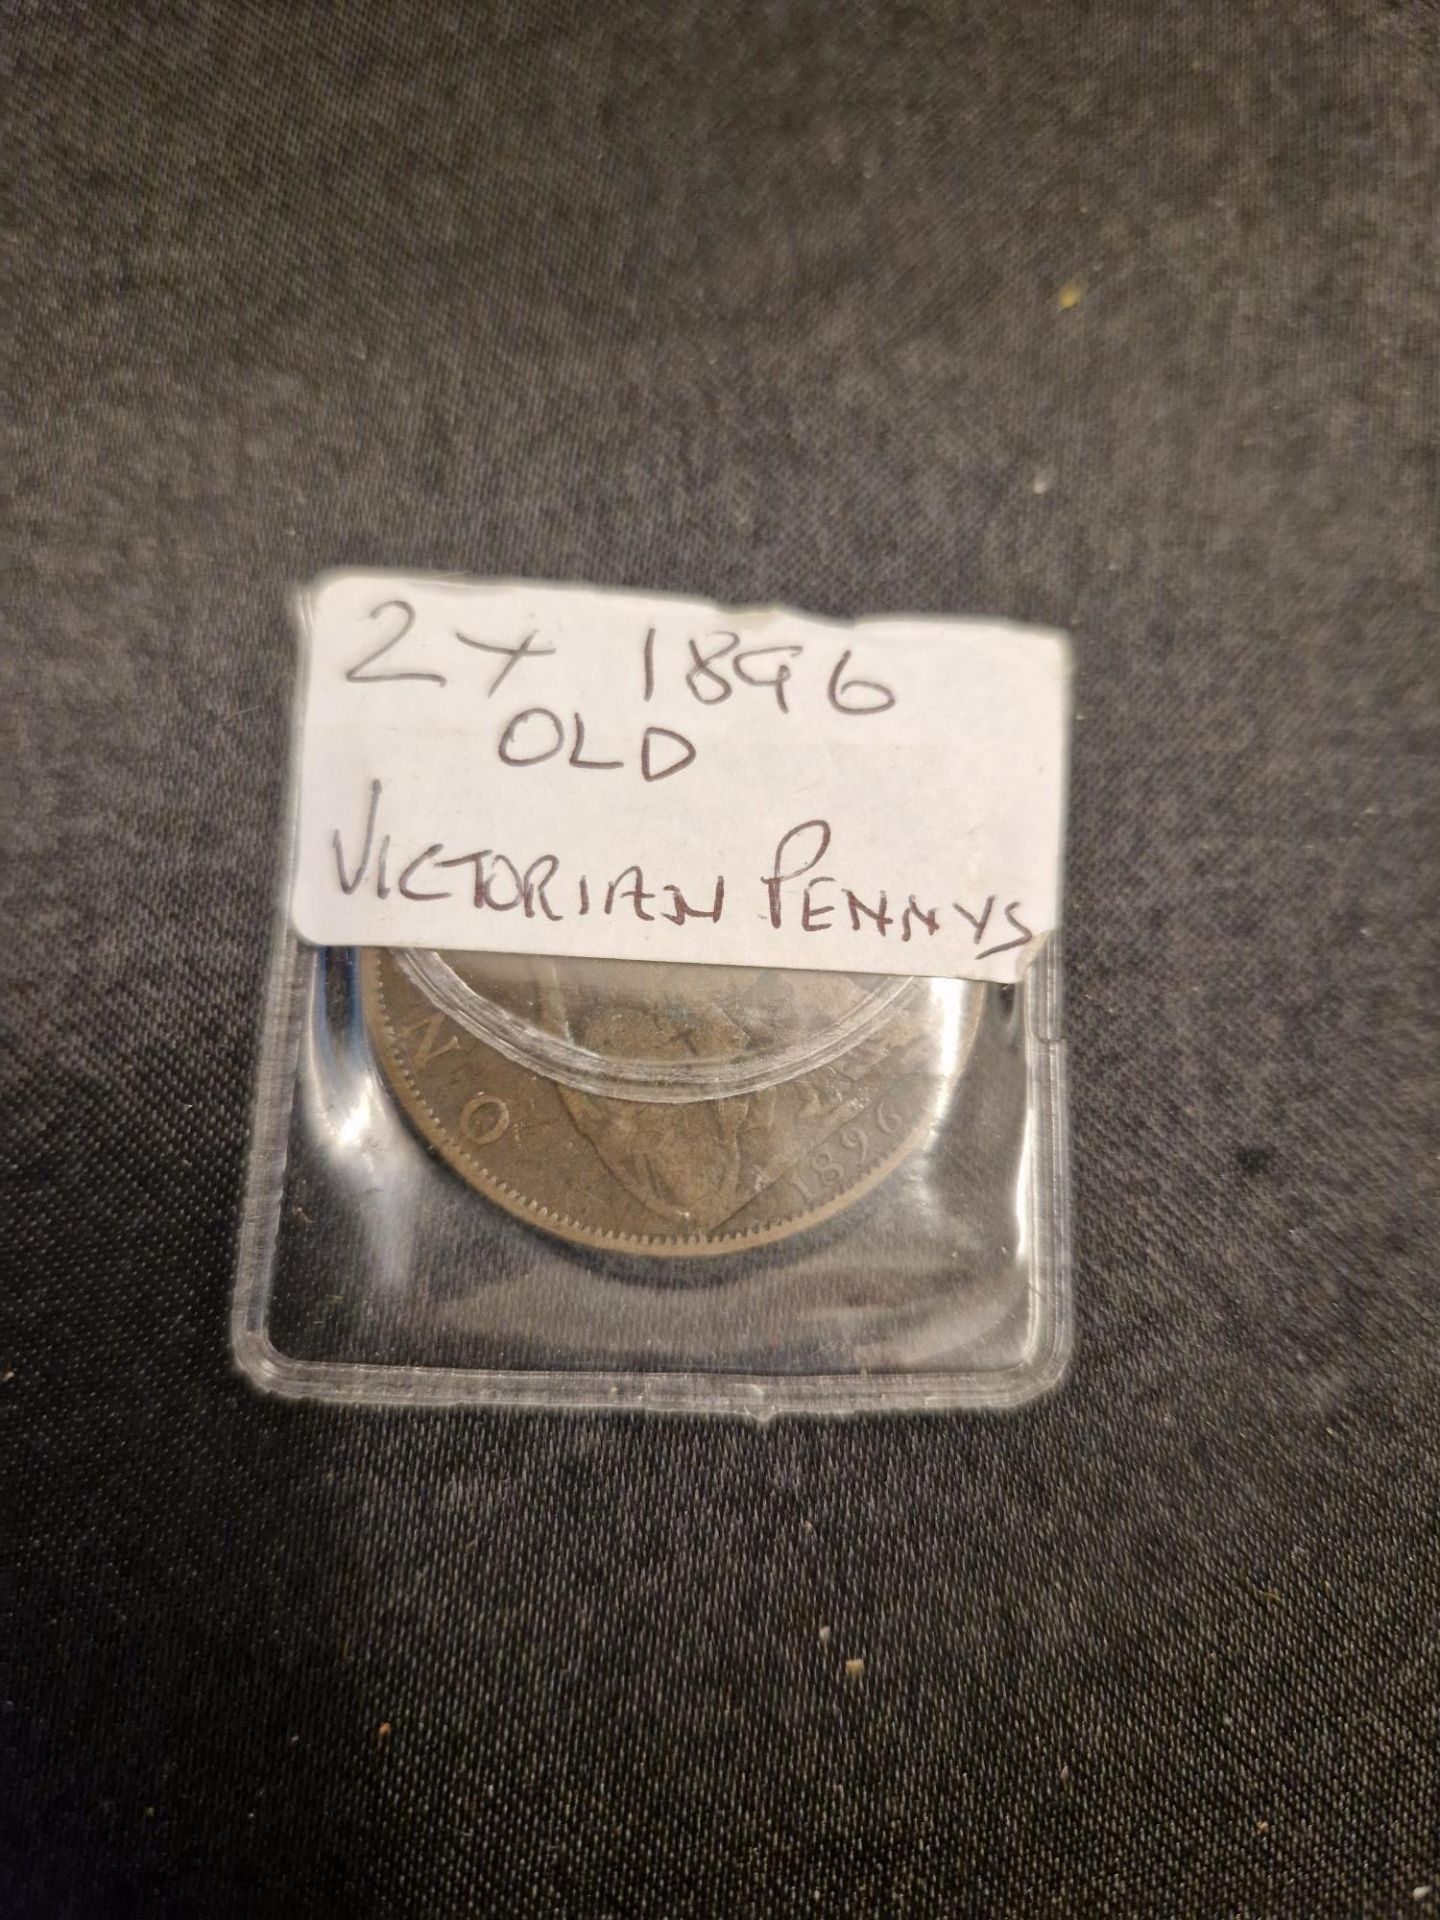 2 x 1896 victorian pennys